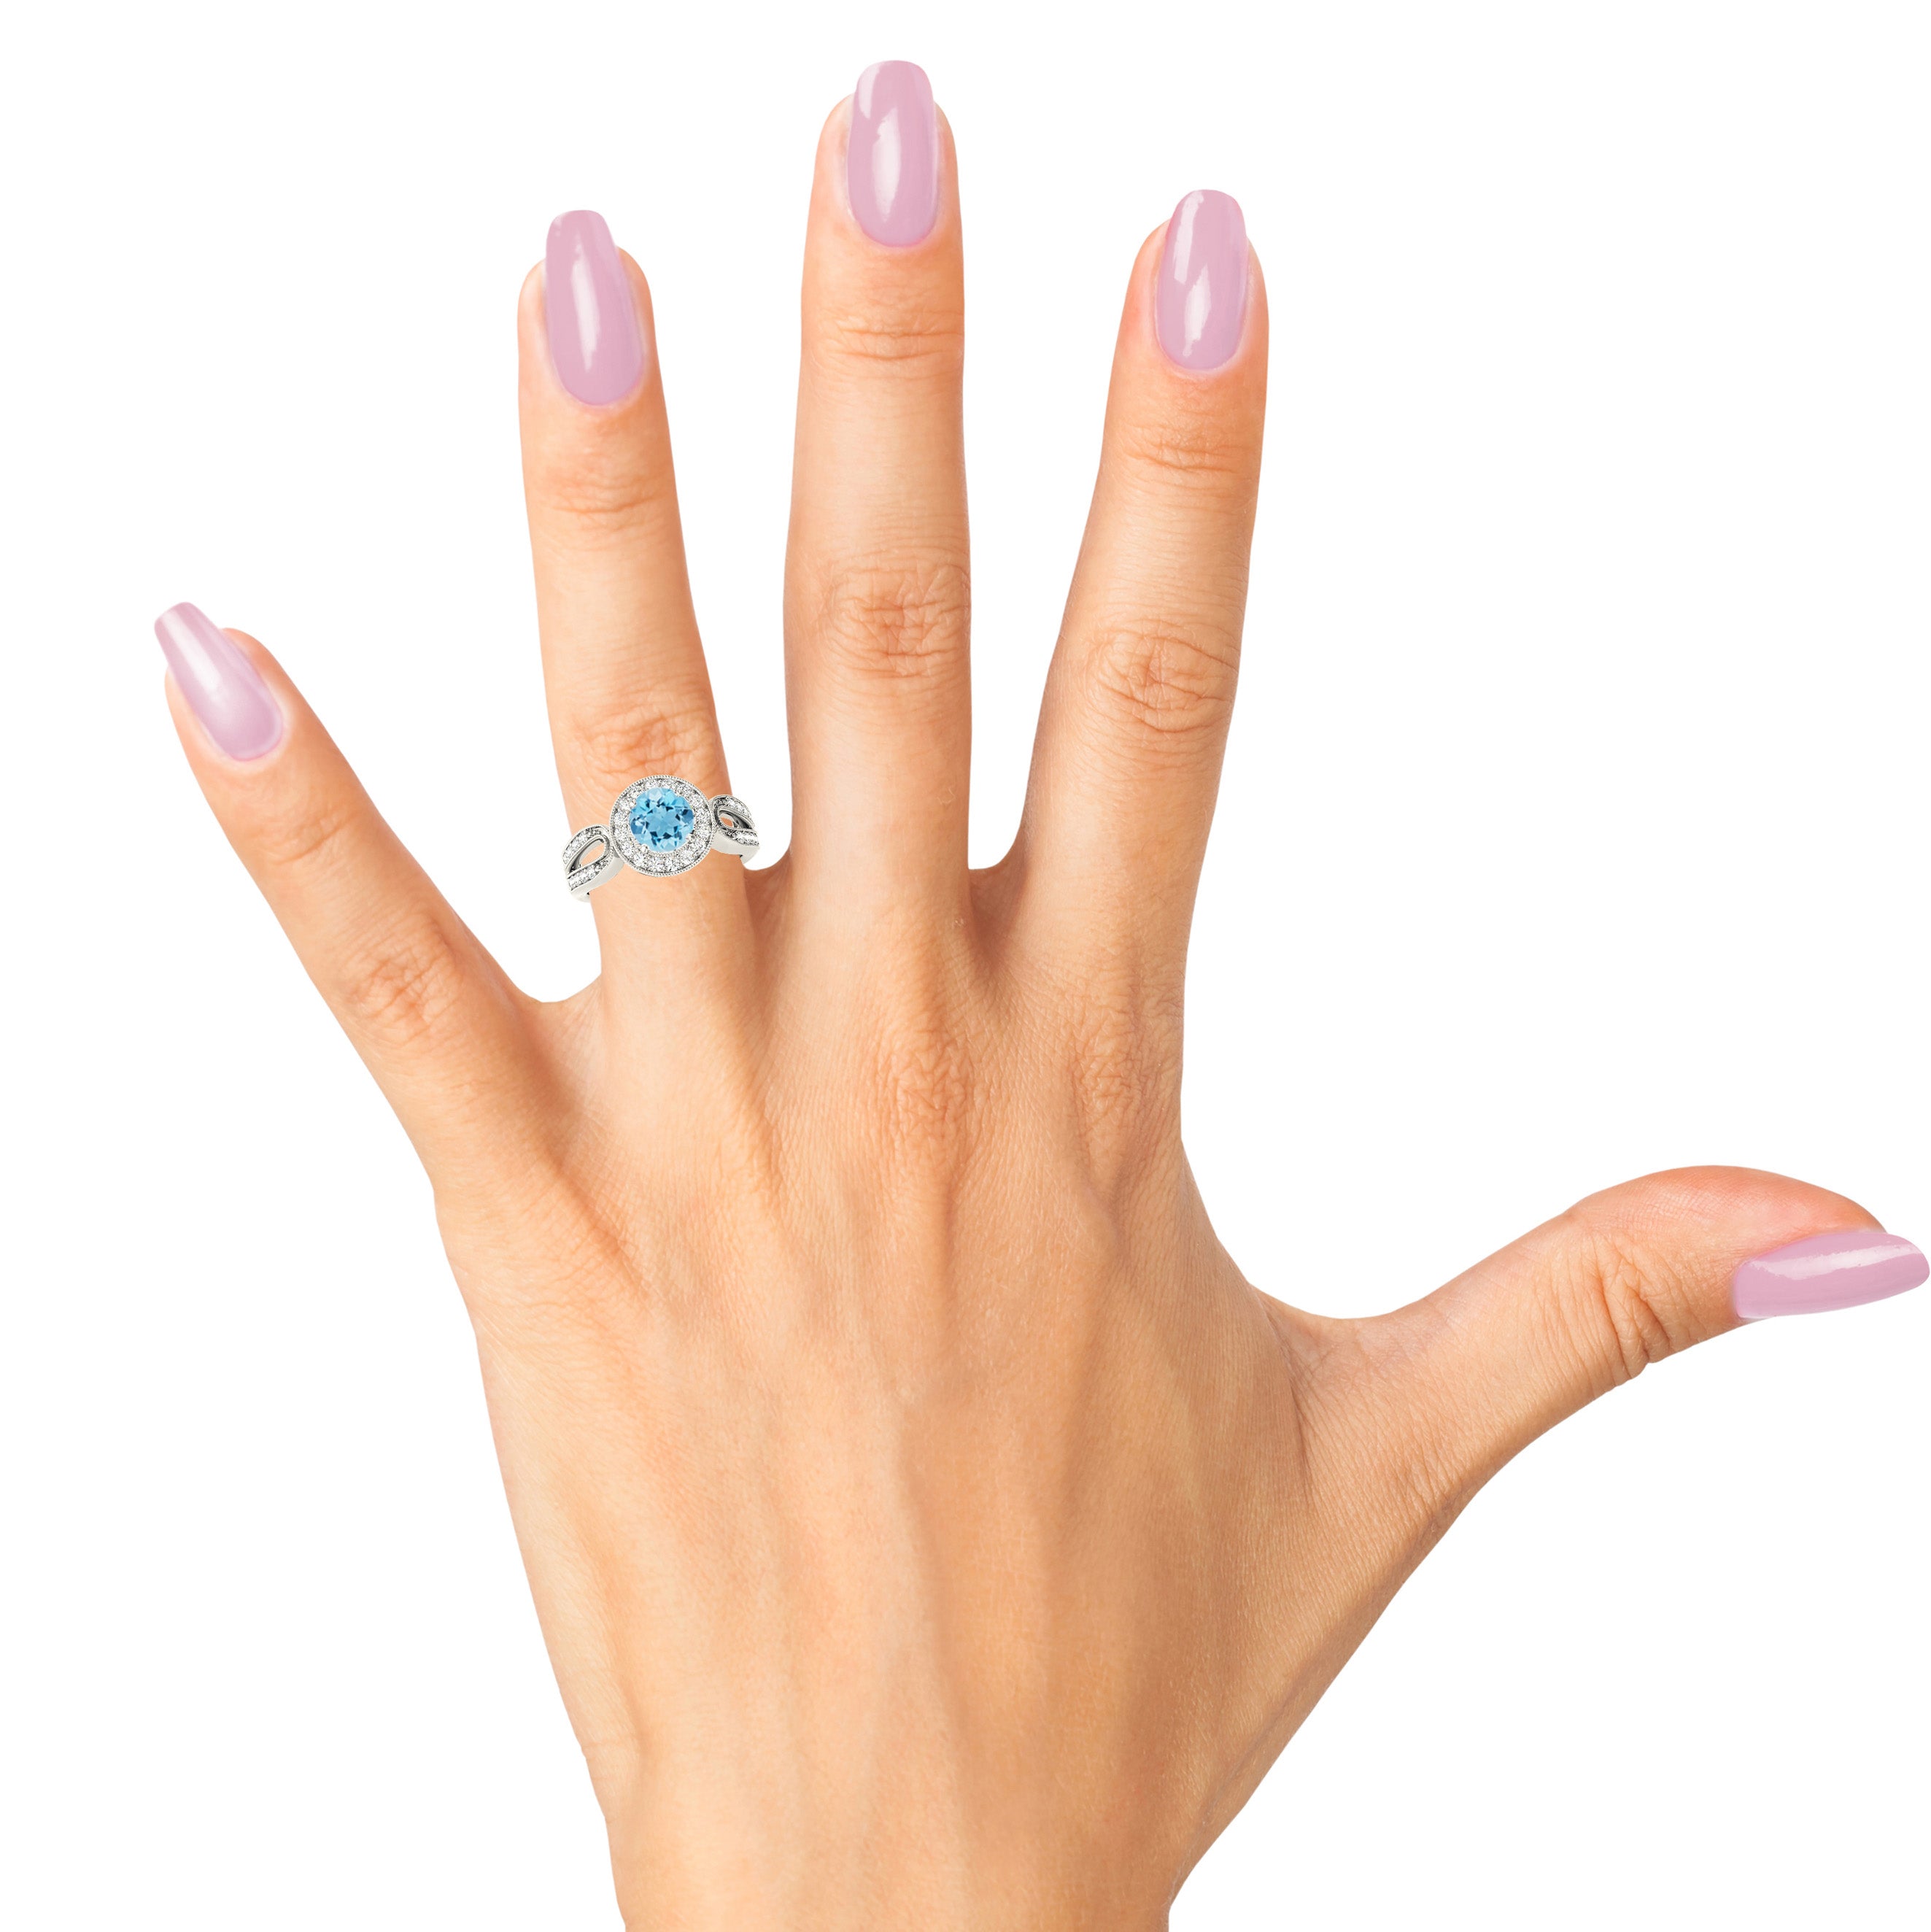 1.75 ct. Genuine Aquamarine Ring With 0.35 ctw. Diamond Milgrain Halo, Open Rounded Diamond Band| Round Blue Aquamarine Halo Ring-in 14K/18K White, Yellow, Rose Gold and Platinum - Christmas Jewelry Gift -VIRABYANI